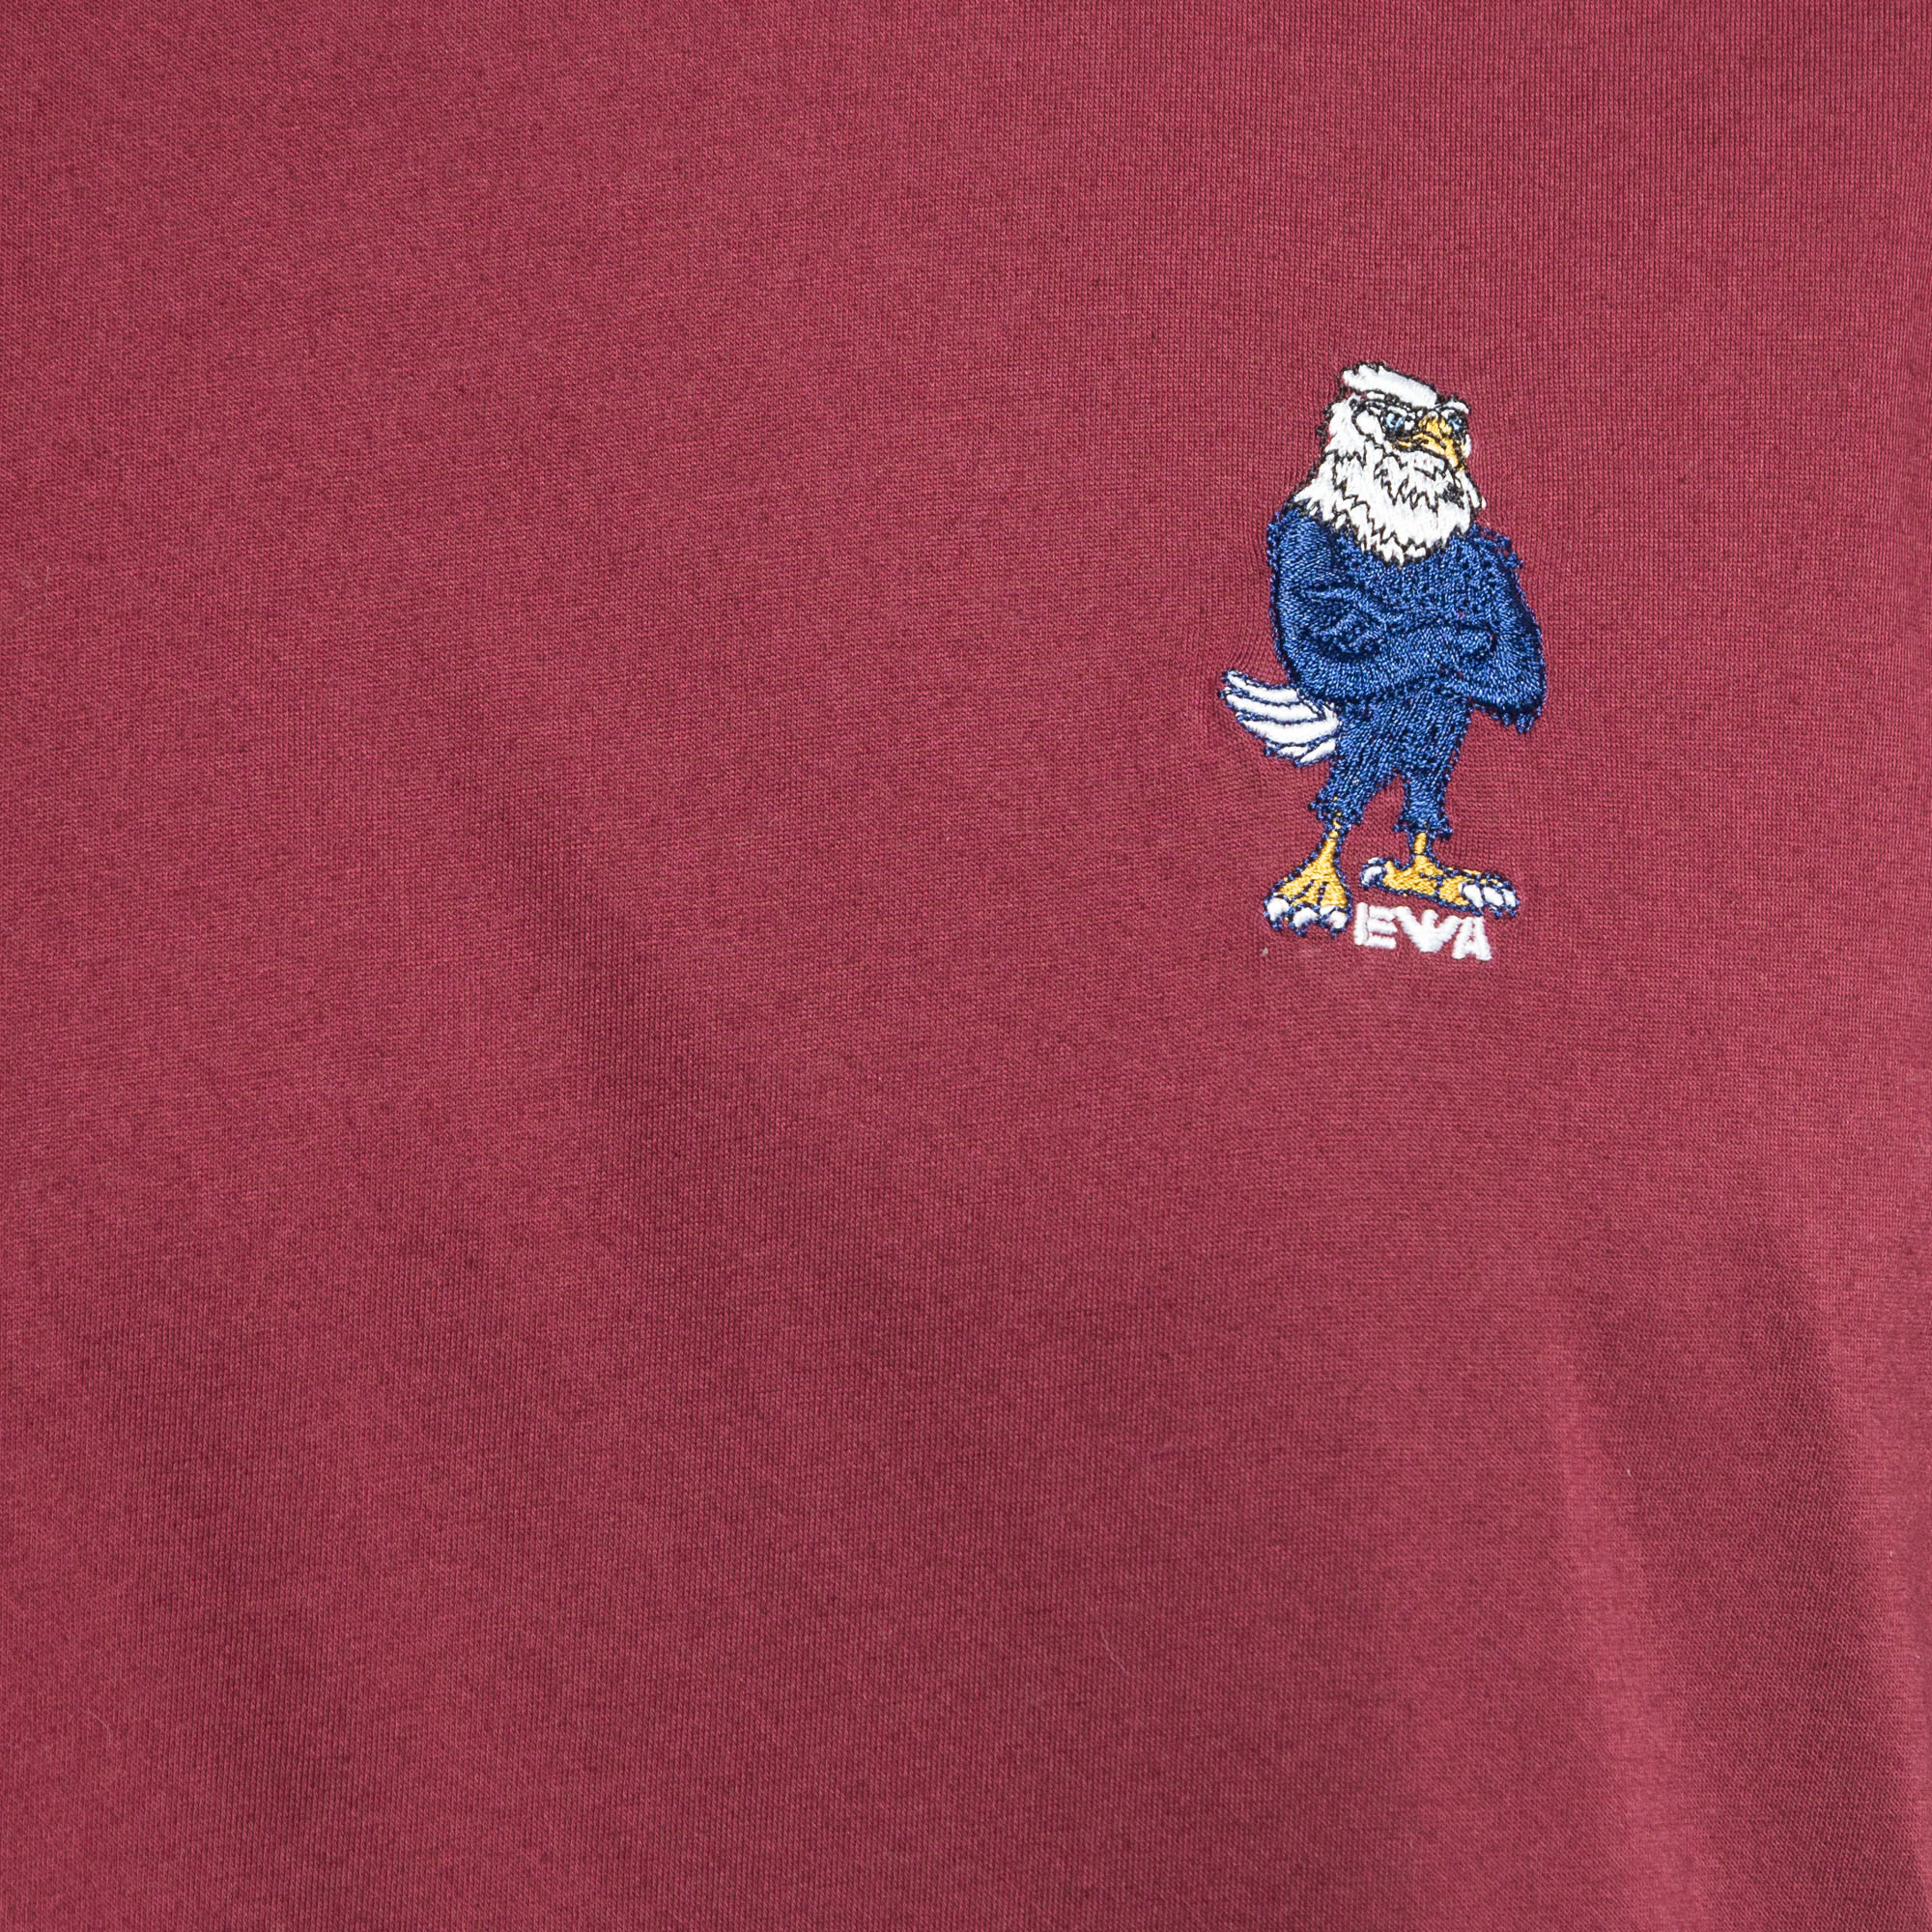 Emporio Armani Burgundy Cotton Embroidered T-Shirt XL